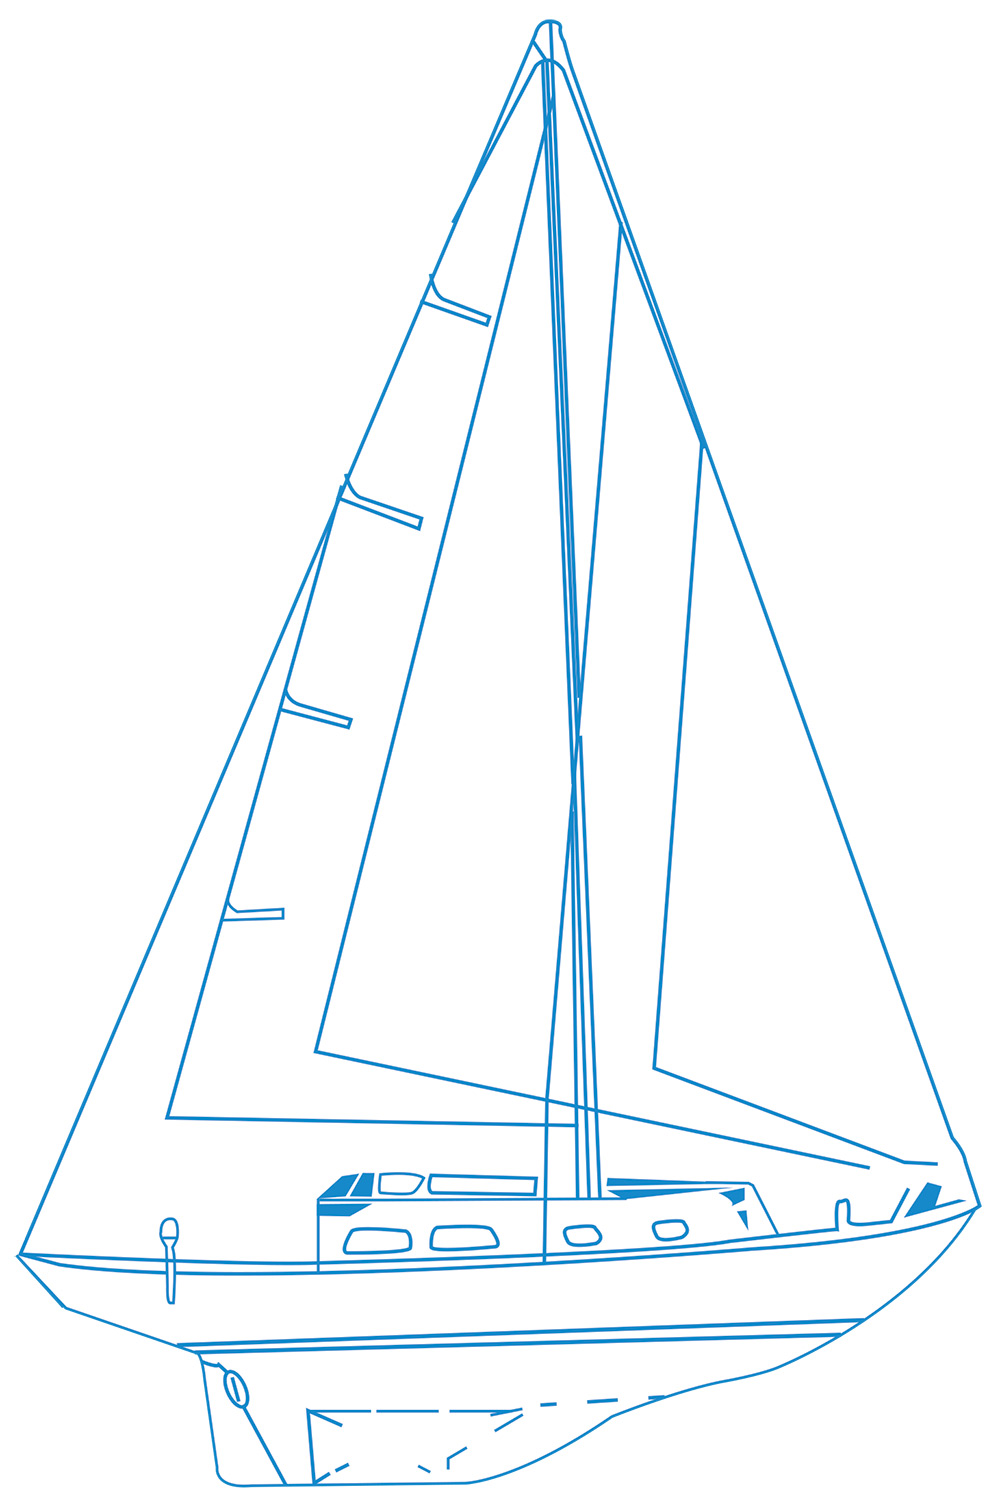 star yachts bristol 32